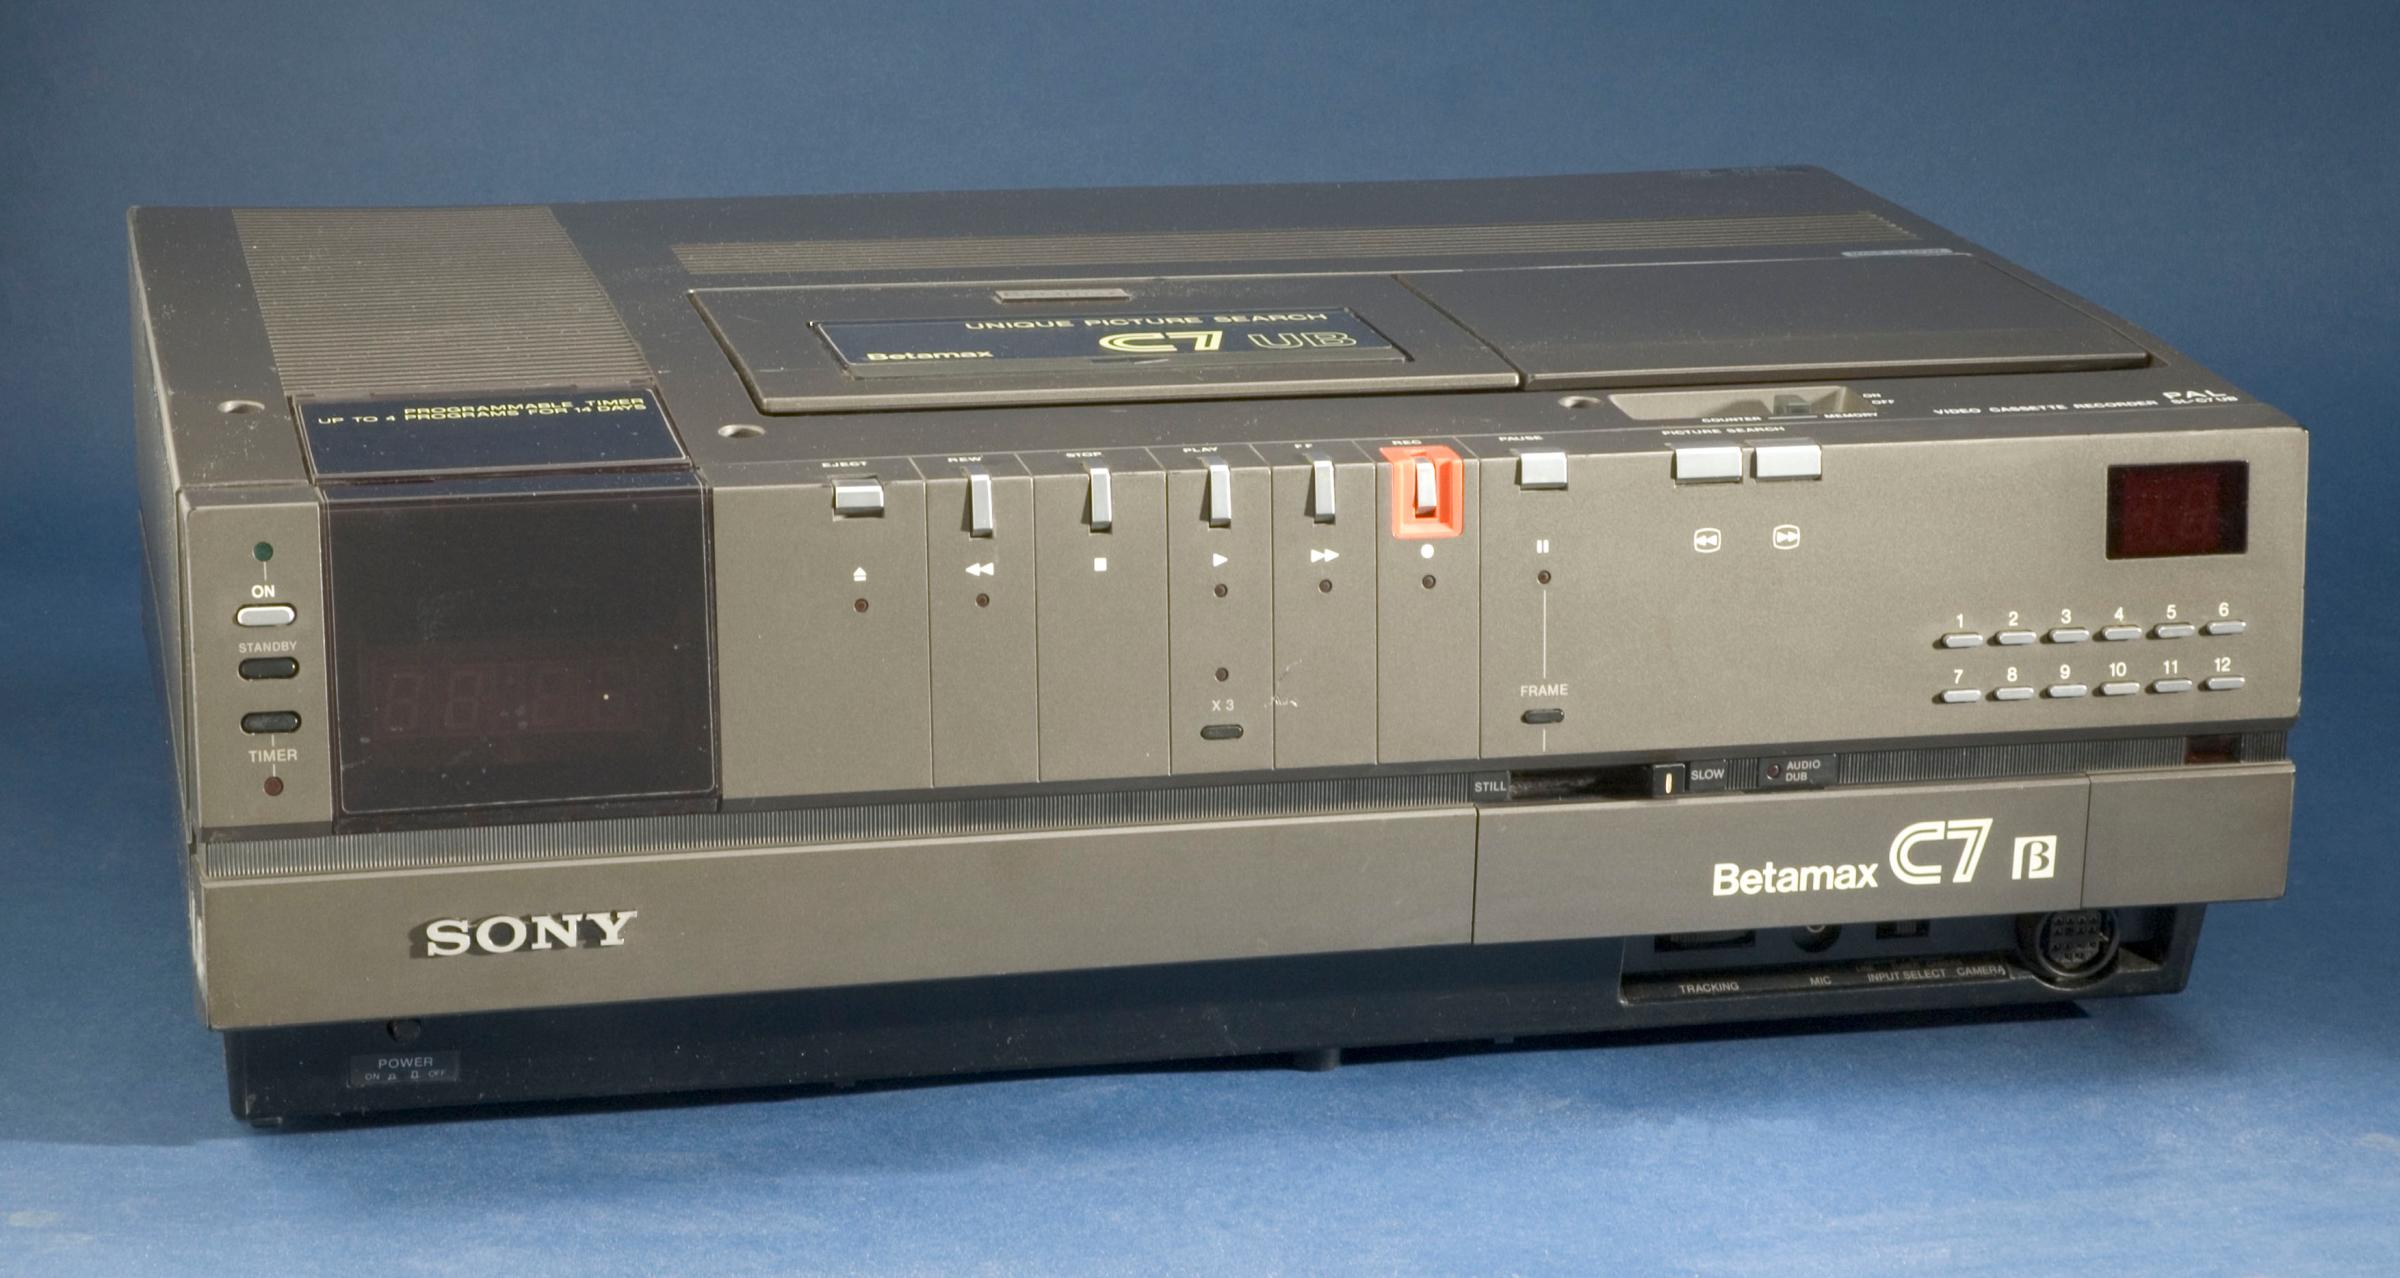 Detail of a Sony Betamax SL-C7 machine, c 1980